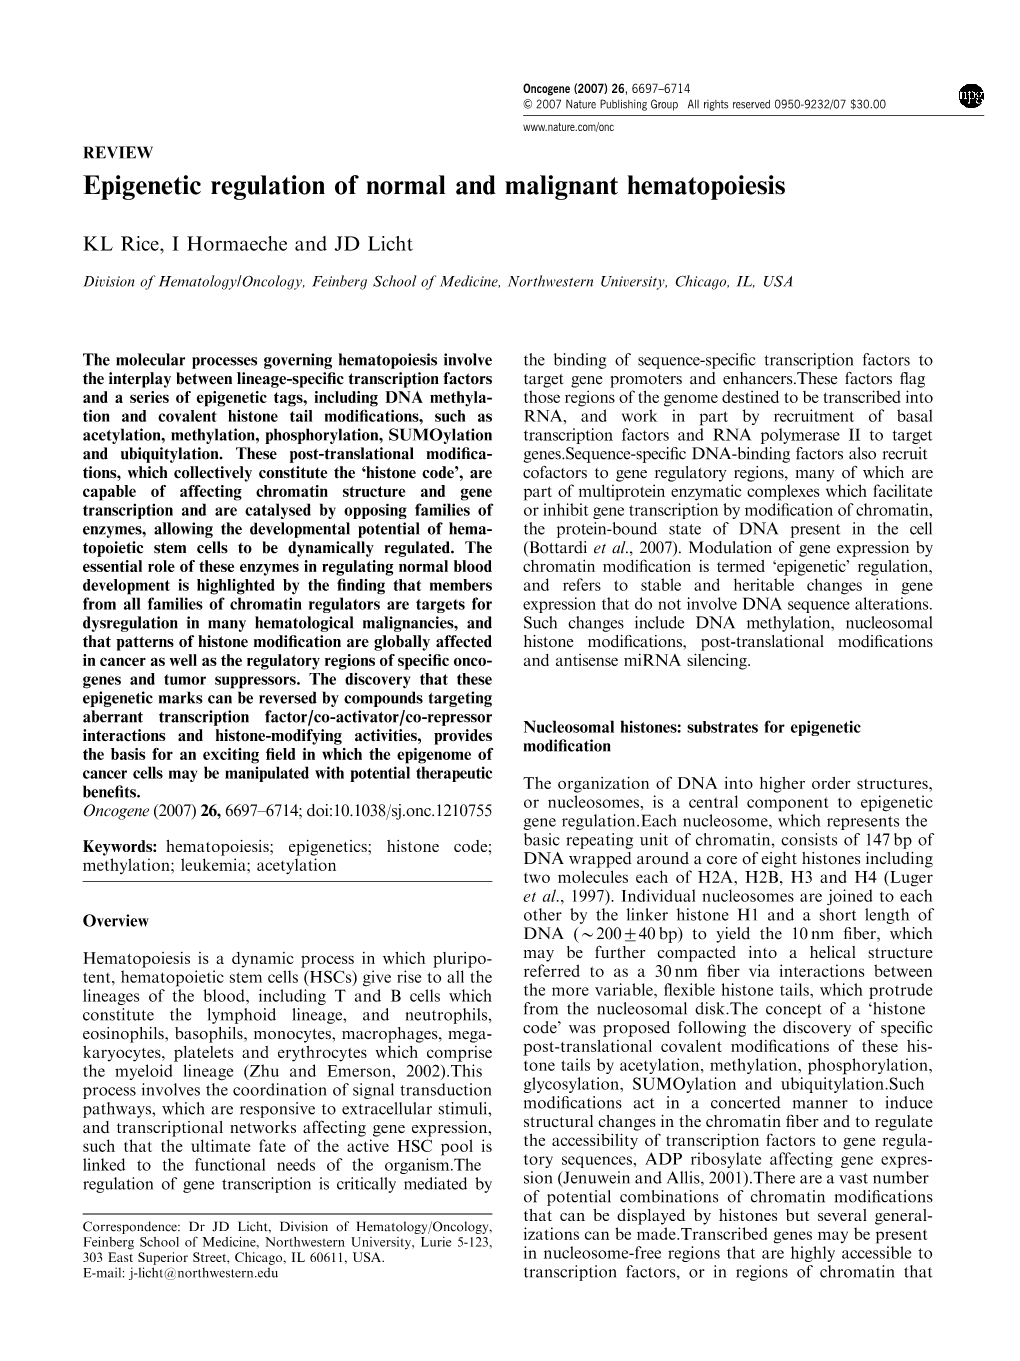 Epigenetic Regulation of Normal and Malignant Hematopoiesis